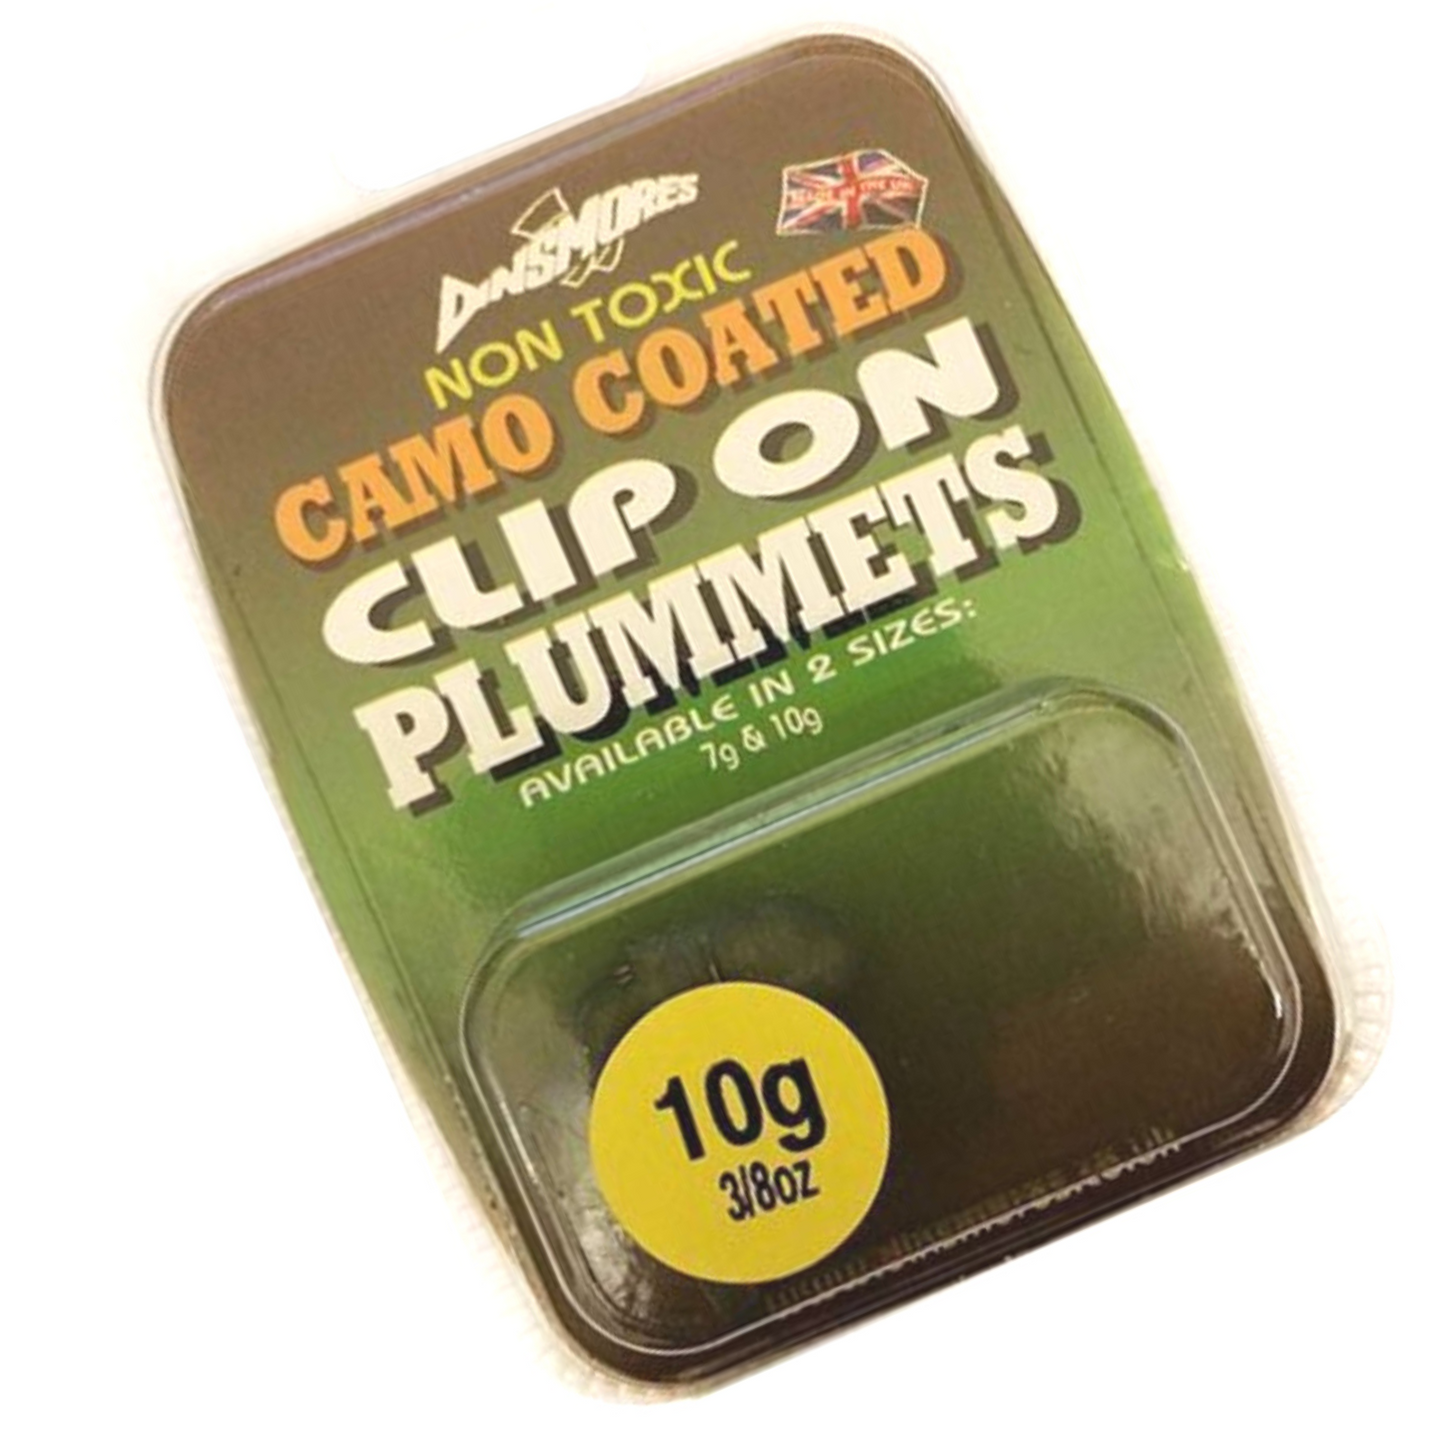 Dinsmores Non Toxic Camo Coated Clip On Plummets - 2 Sizes